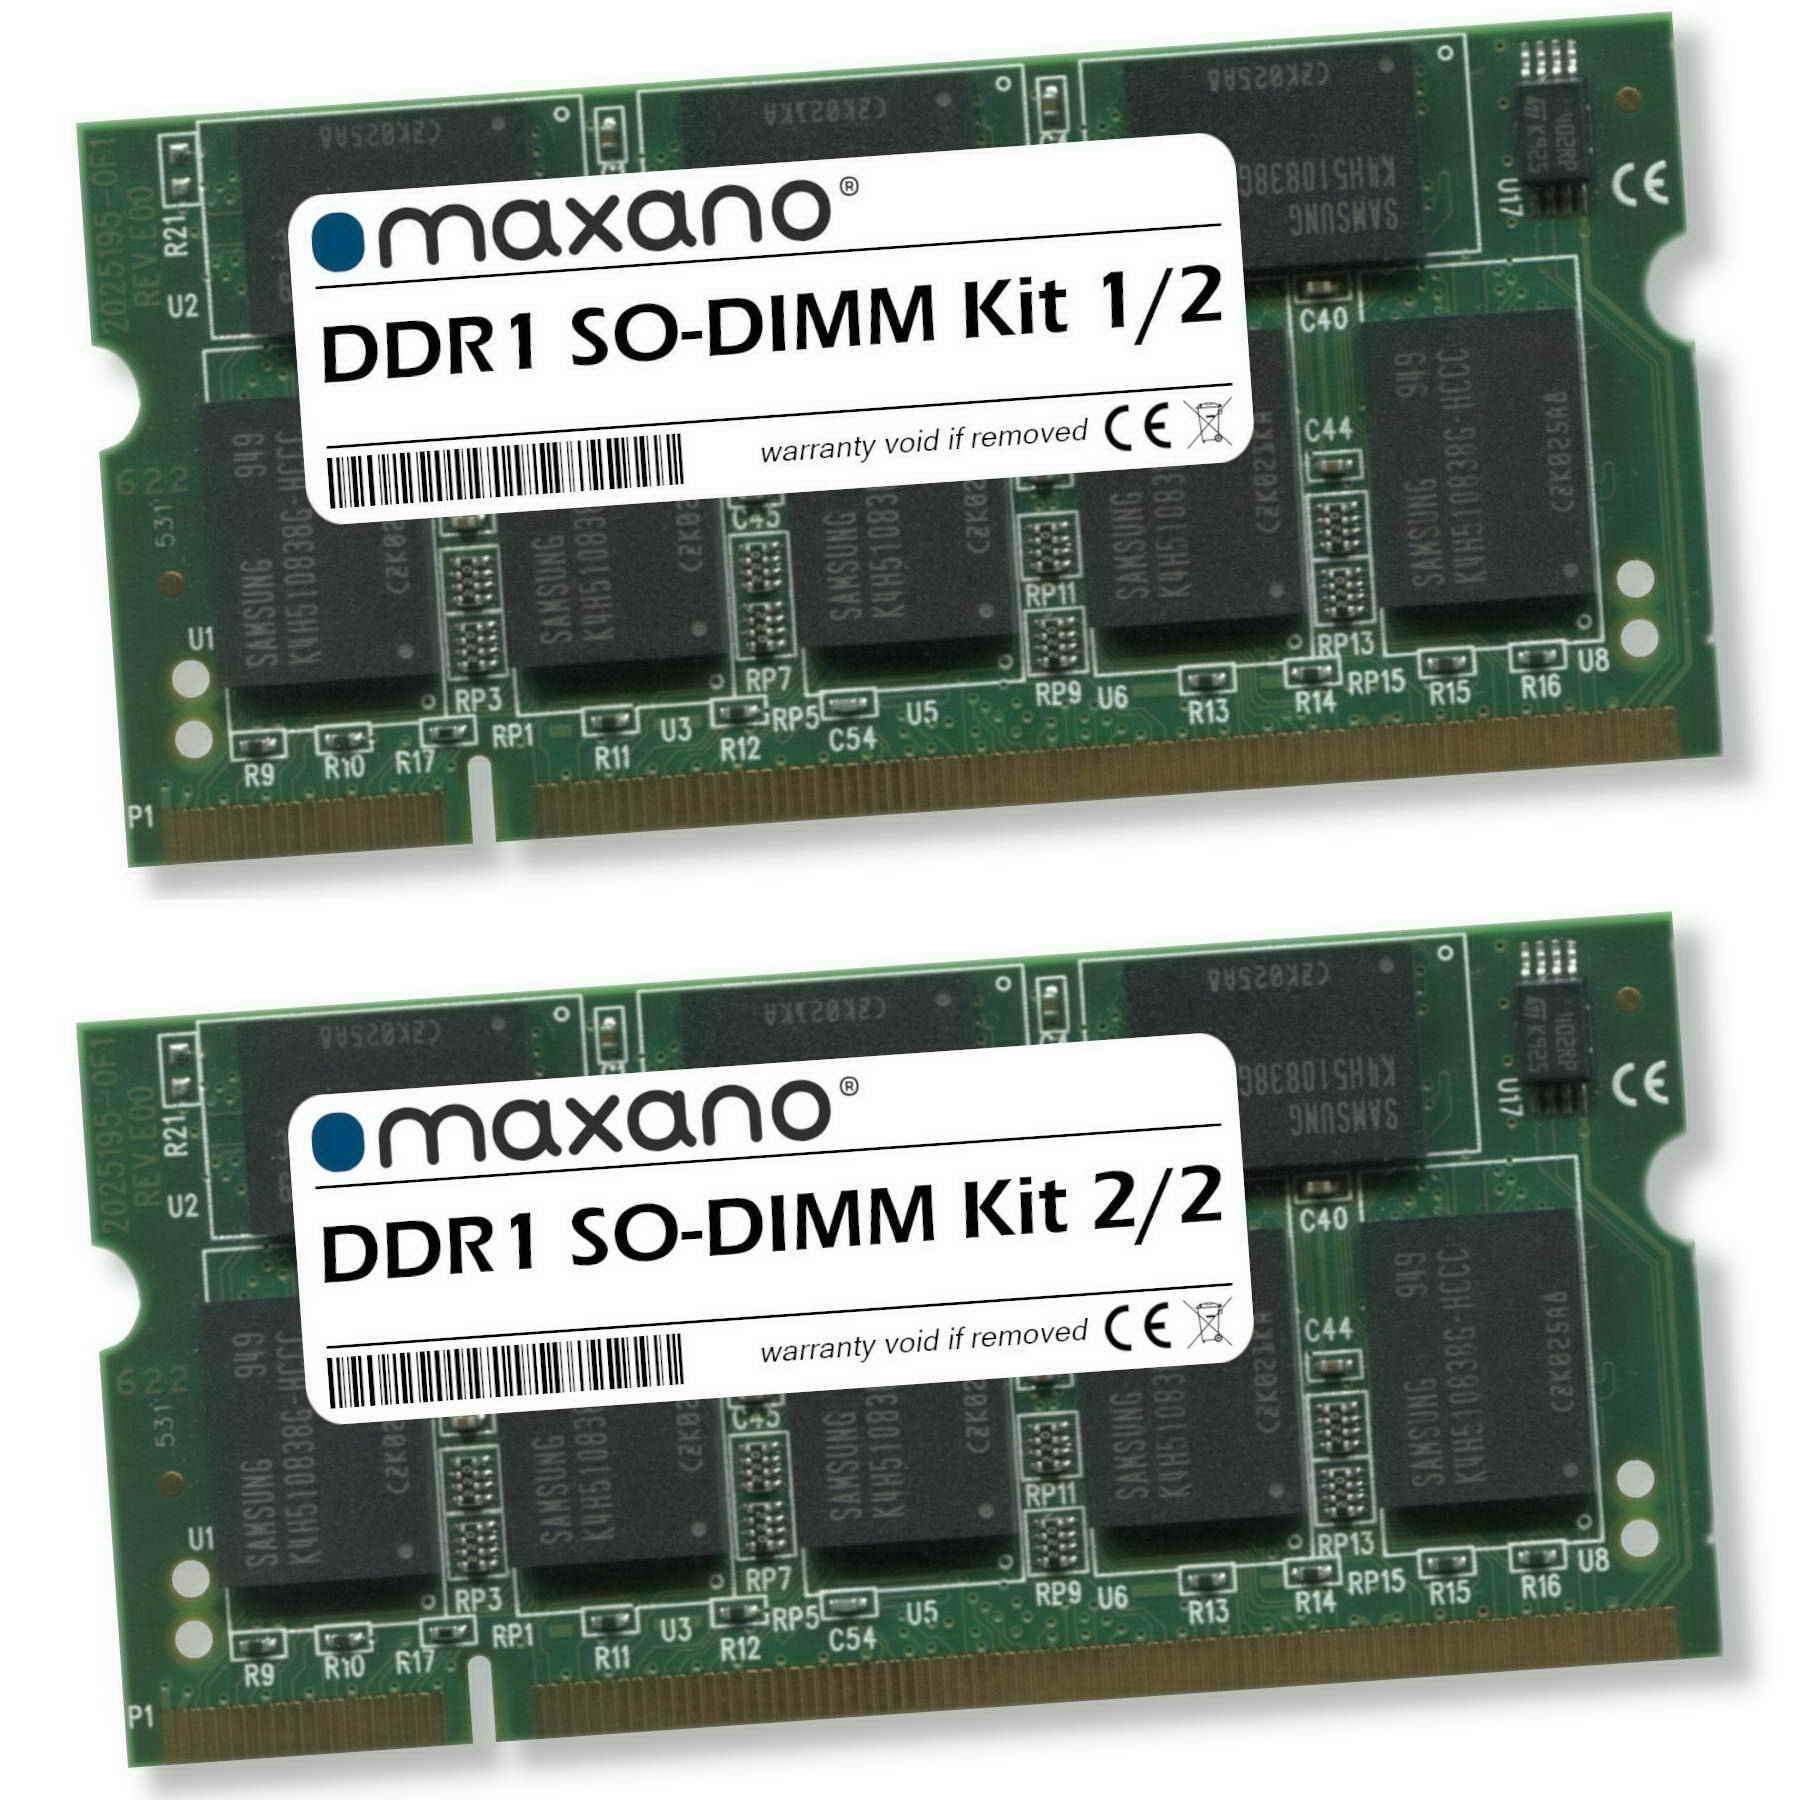 MAXANO 2GB Kit / HPE nx9105 2 HP für SDRAM RAM Compaq 1GB SO-DIMM) 2x GB Arbeitsspeicher (PC-2700